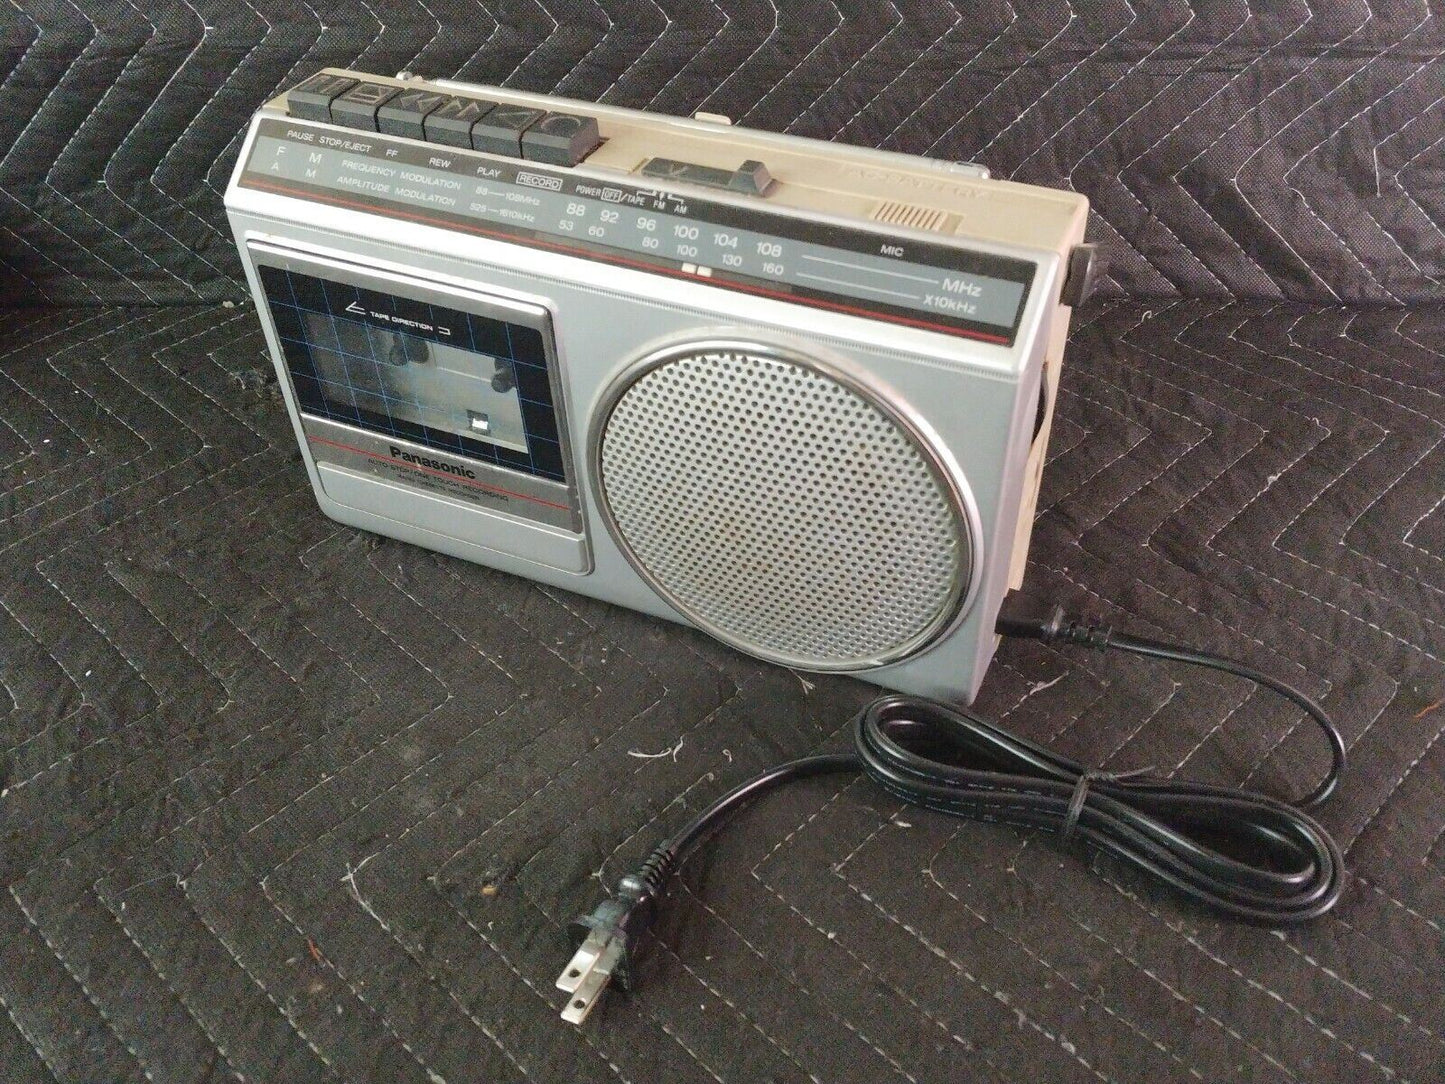 Panasonic RX-1210 Portable Radio - Am/fm Works - Tape Deck needs service